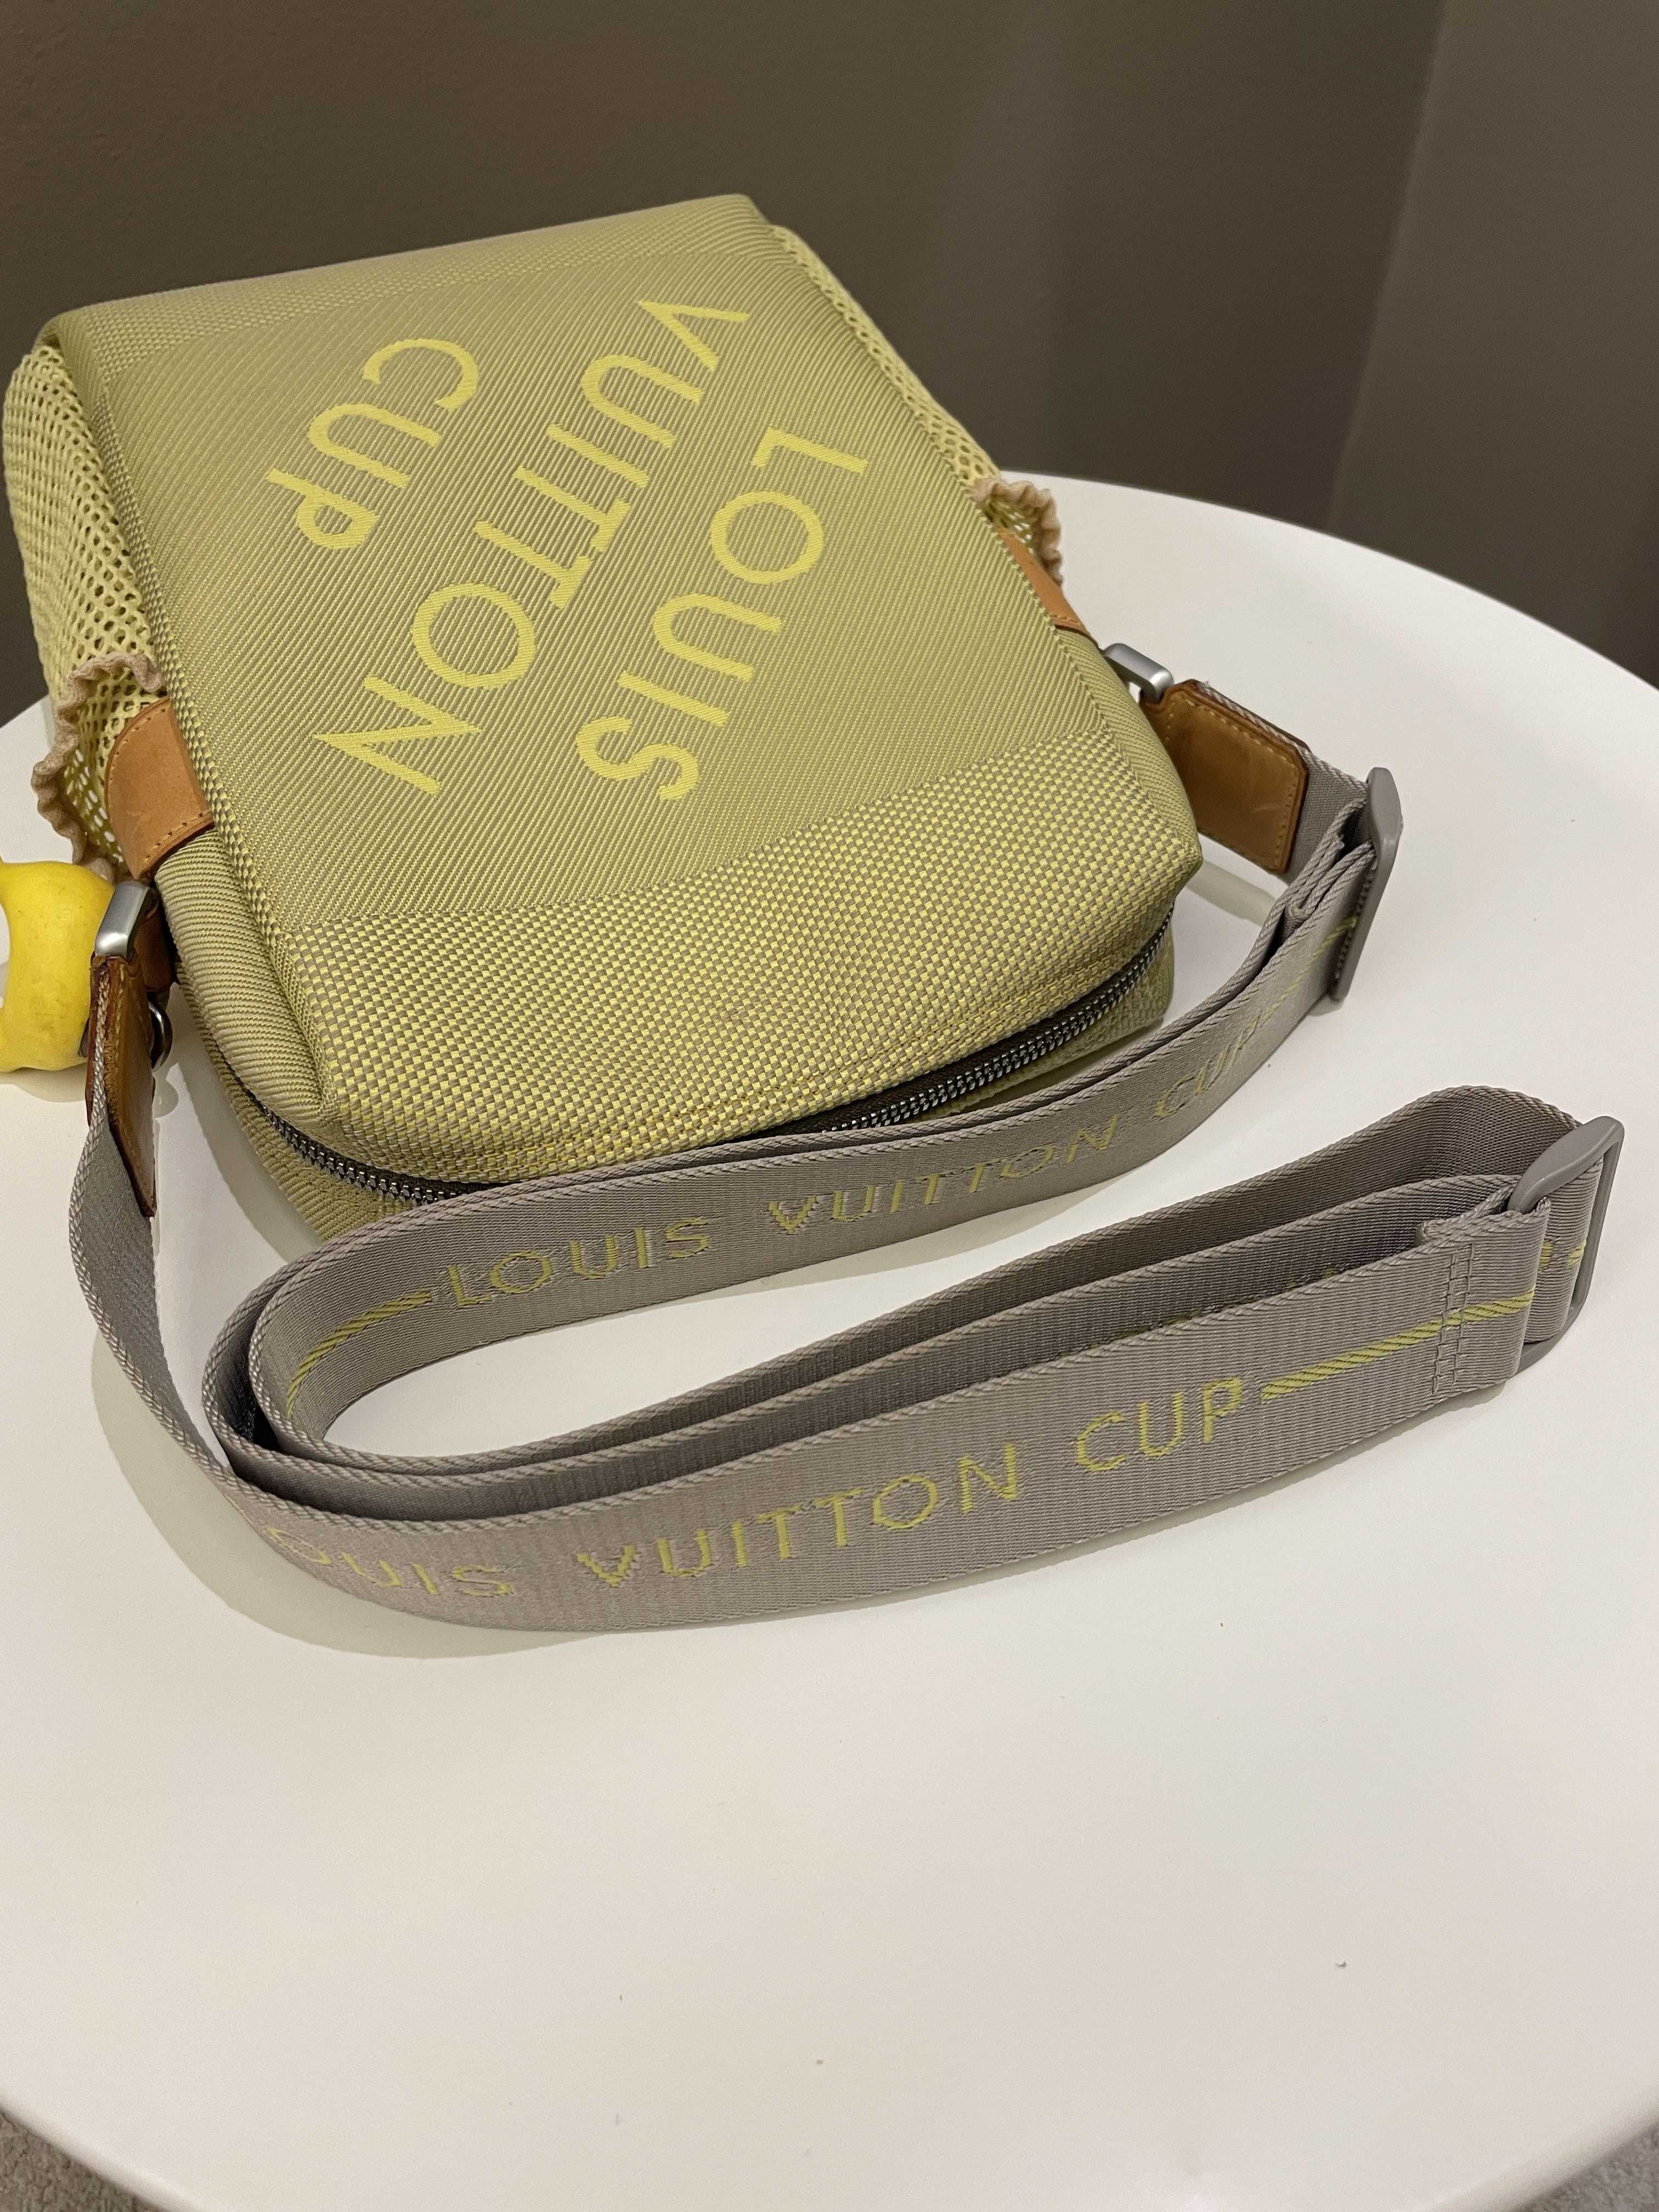 Cup Weatherly Louis Vuitton Shoulder bag